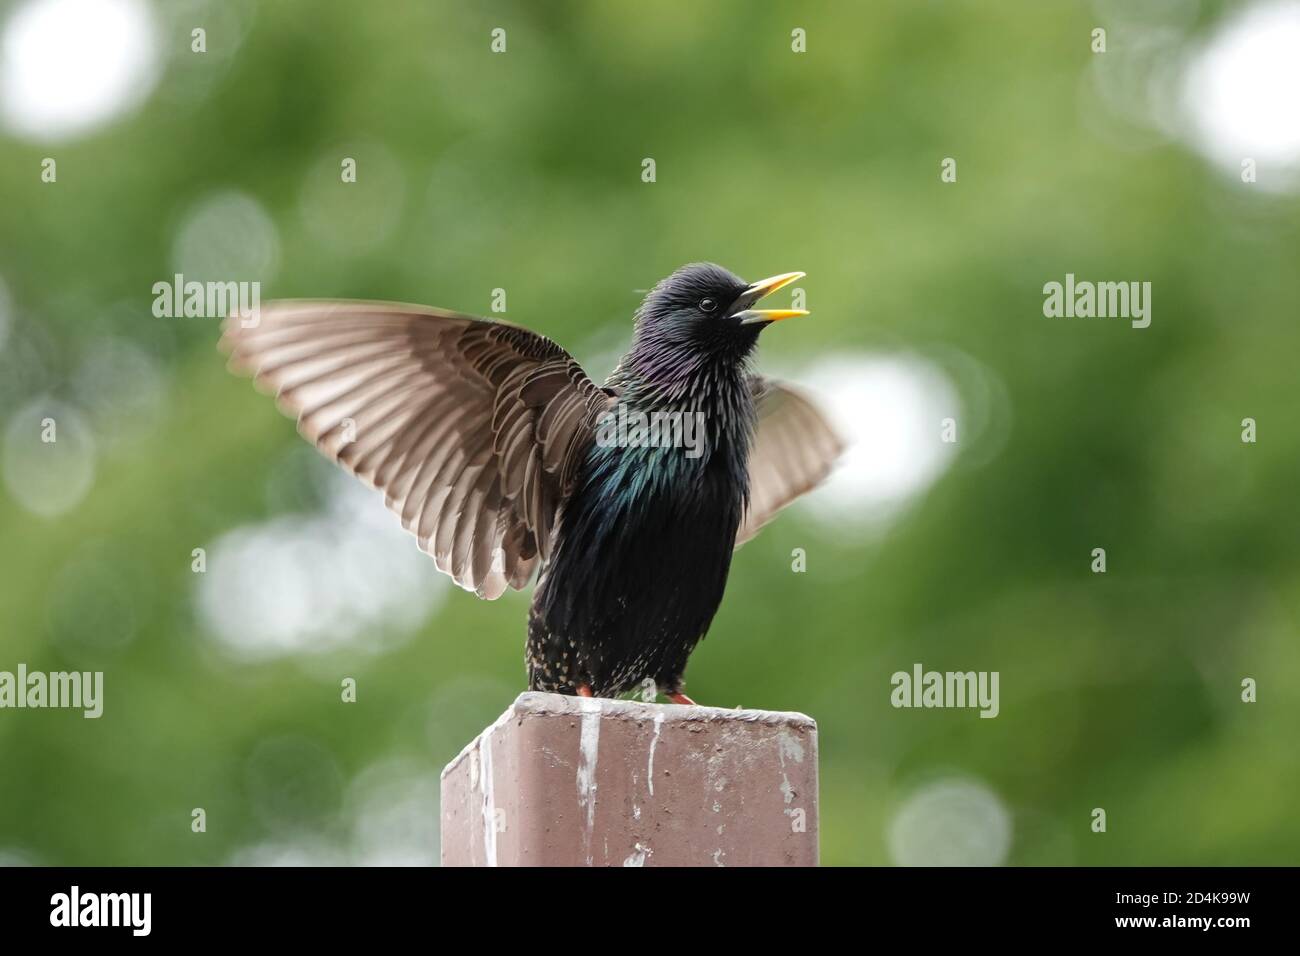 European starling, also know as Common starling, Sturnus vulgaris Stock Photo